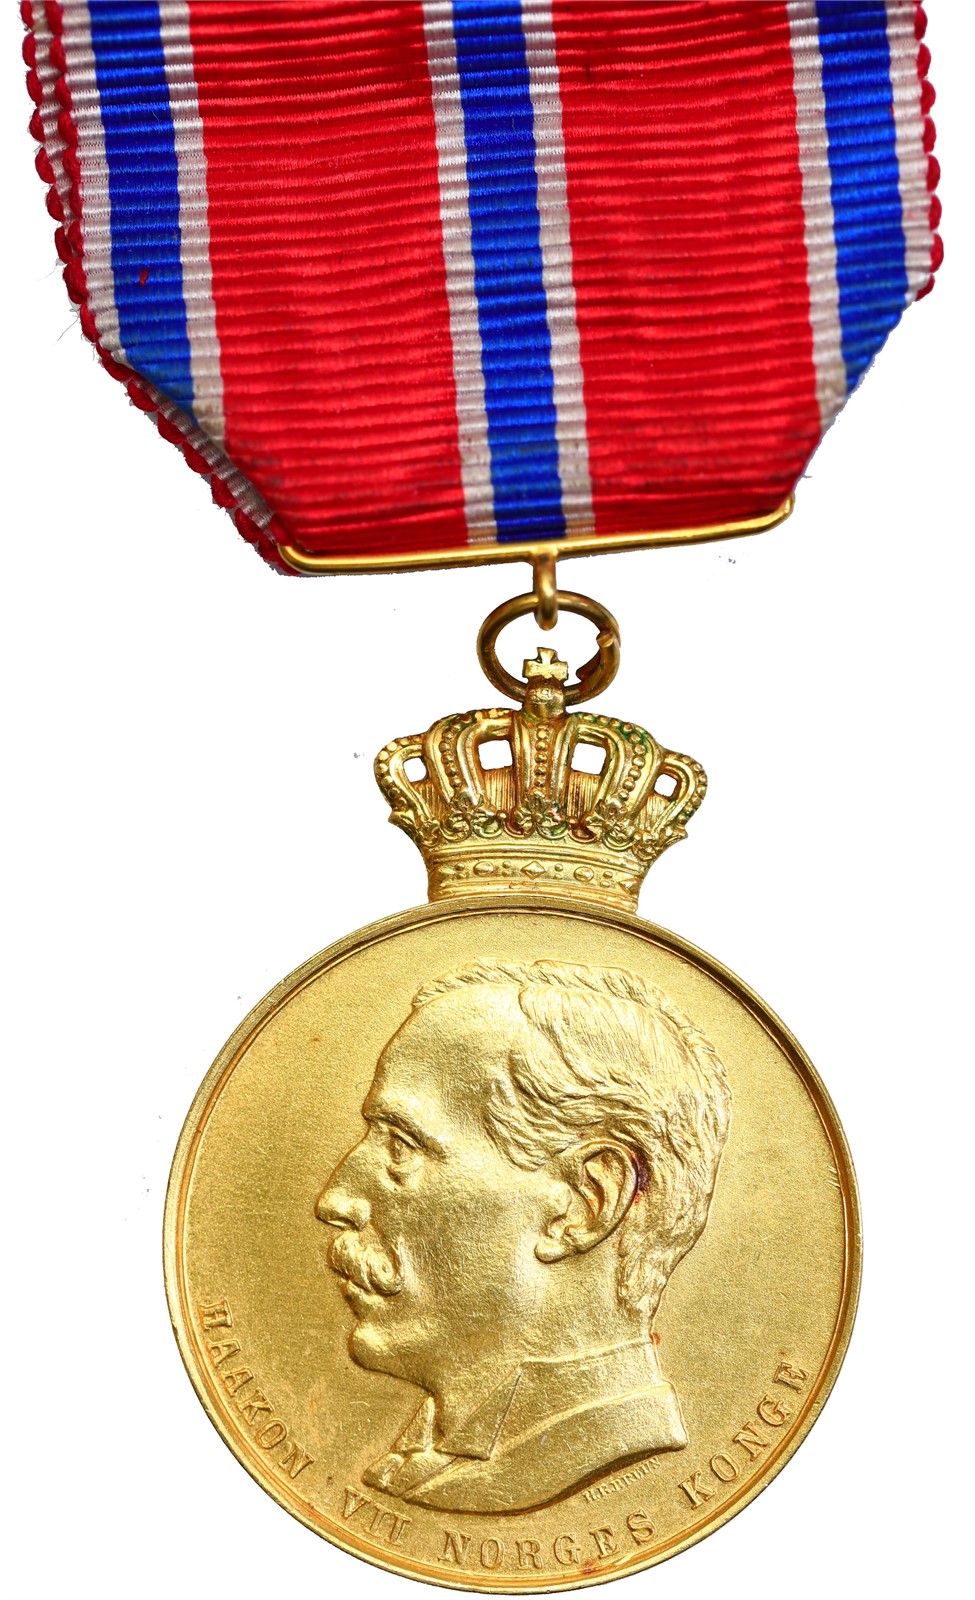 NORWAY. Haakon VII. Medaljen for Edel Daad Gull